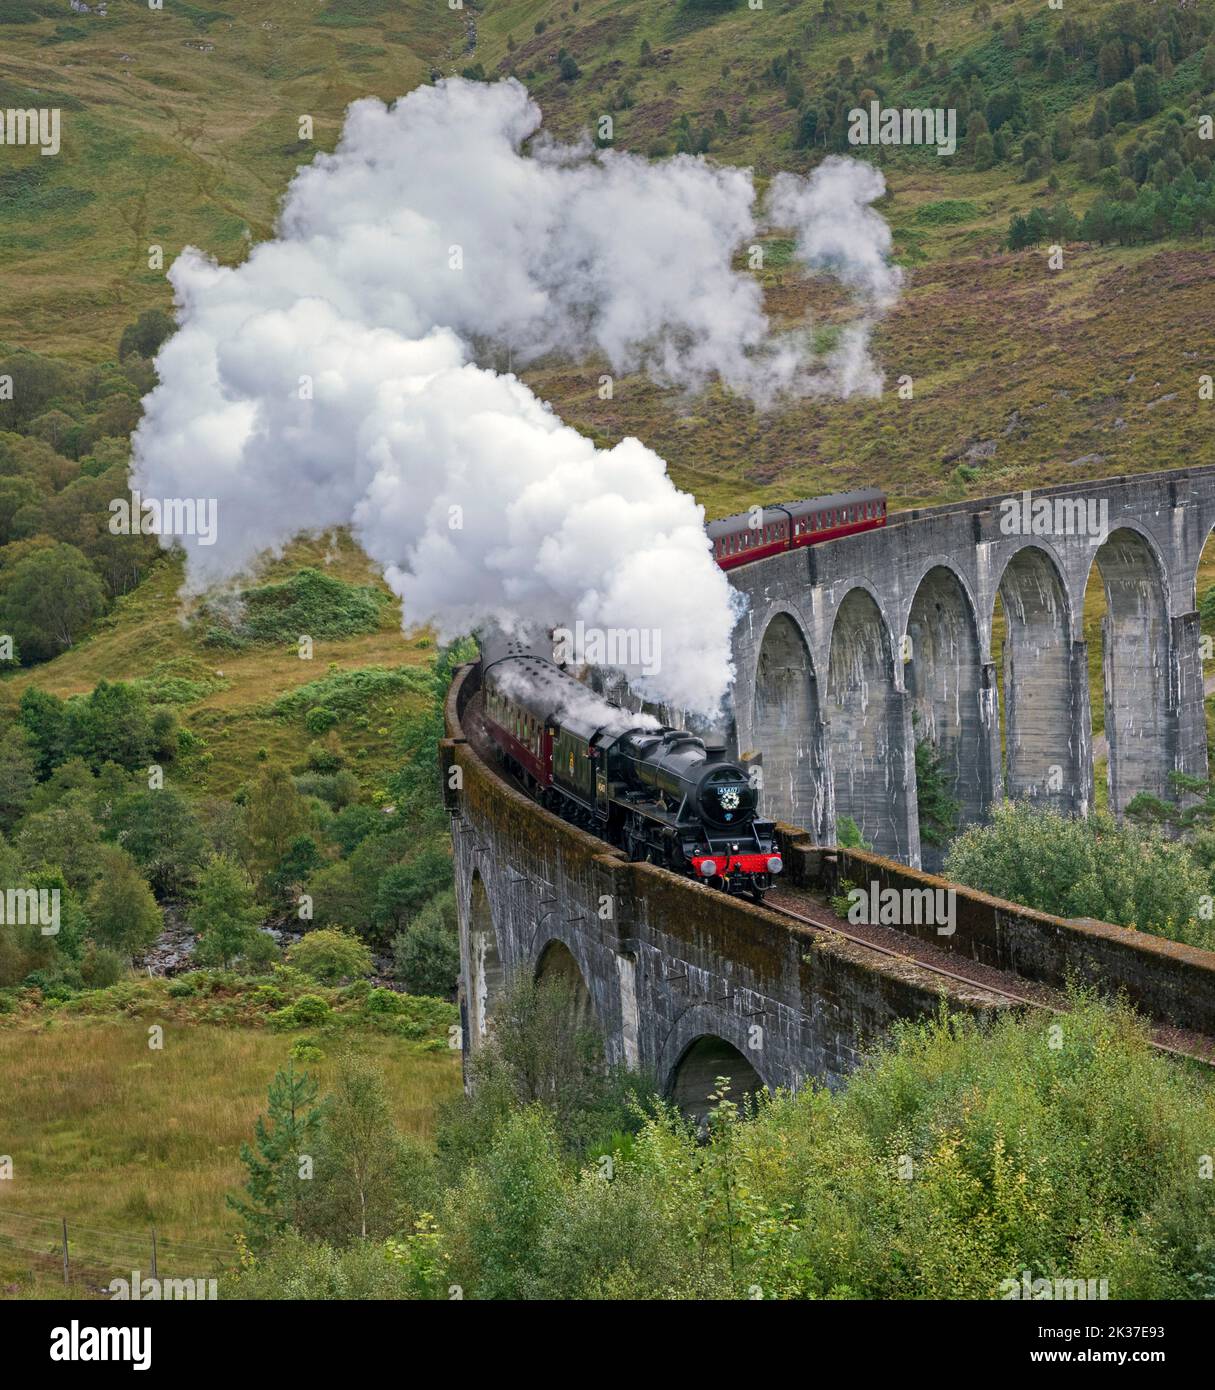 Tren de Vapor Jacobita, Viaducto de Glenifinnan, Lochaber, Tierras Altas Escocesas, Escocia, REINO UNIDO Foto de stock